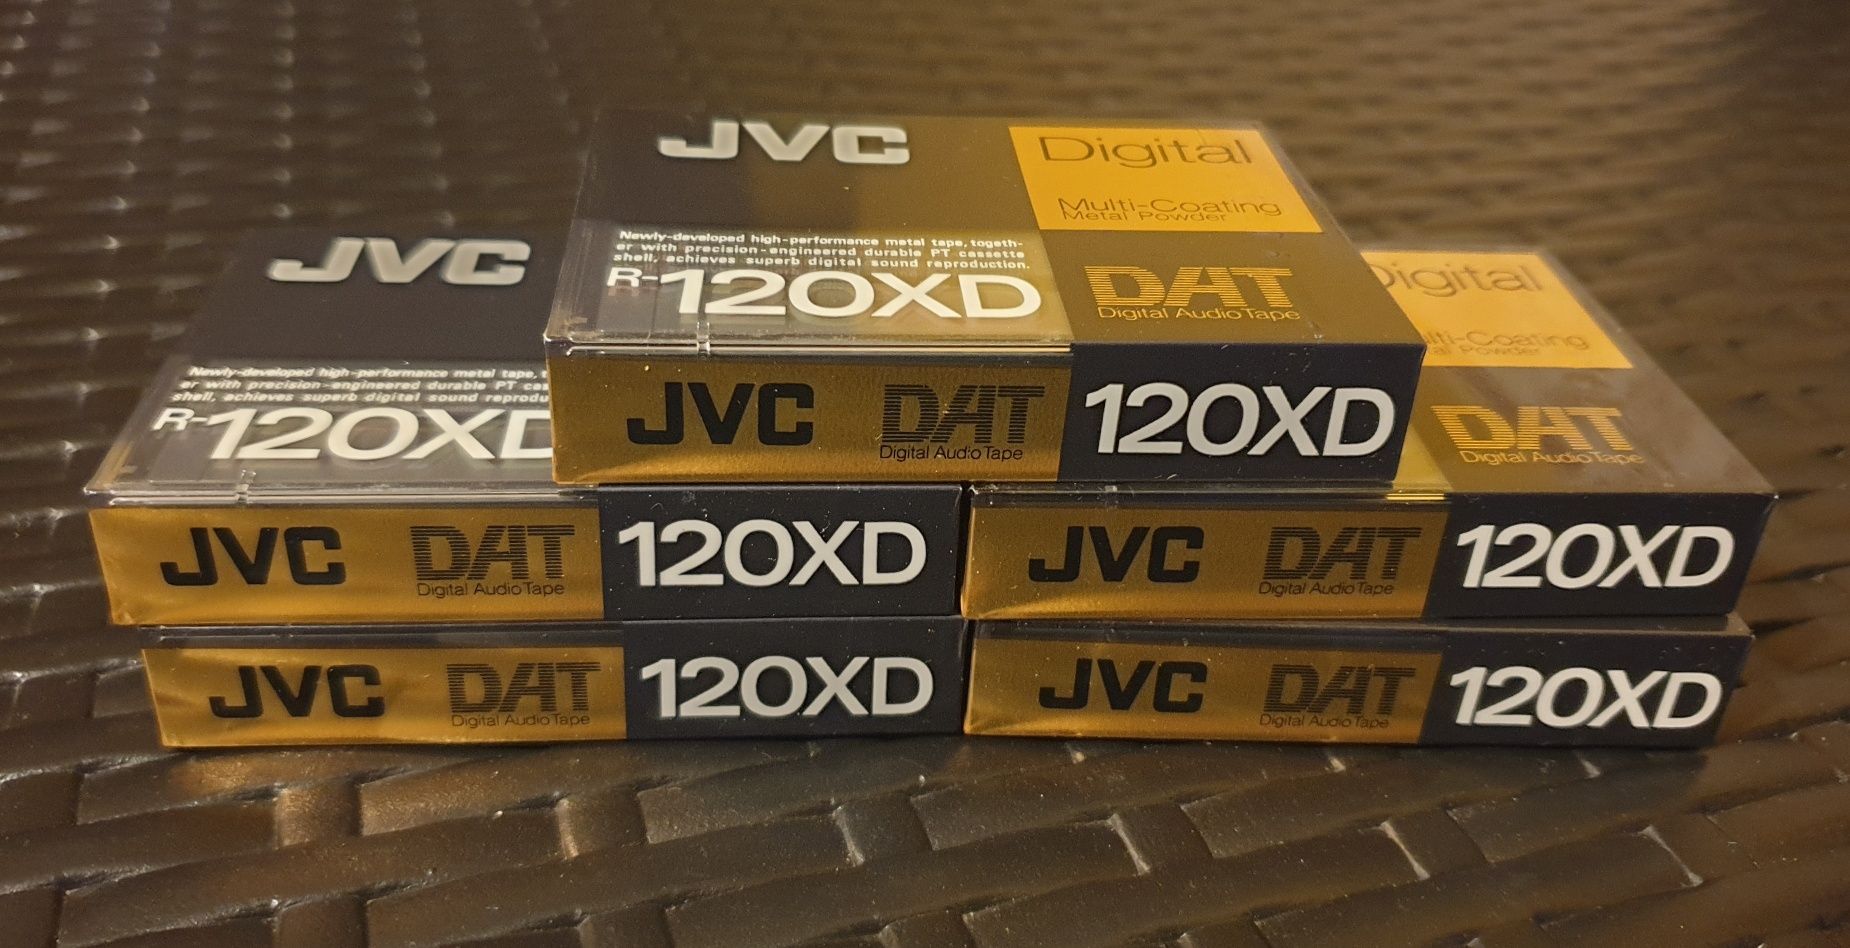 Cassete DAT R-120XD da JVC